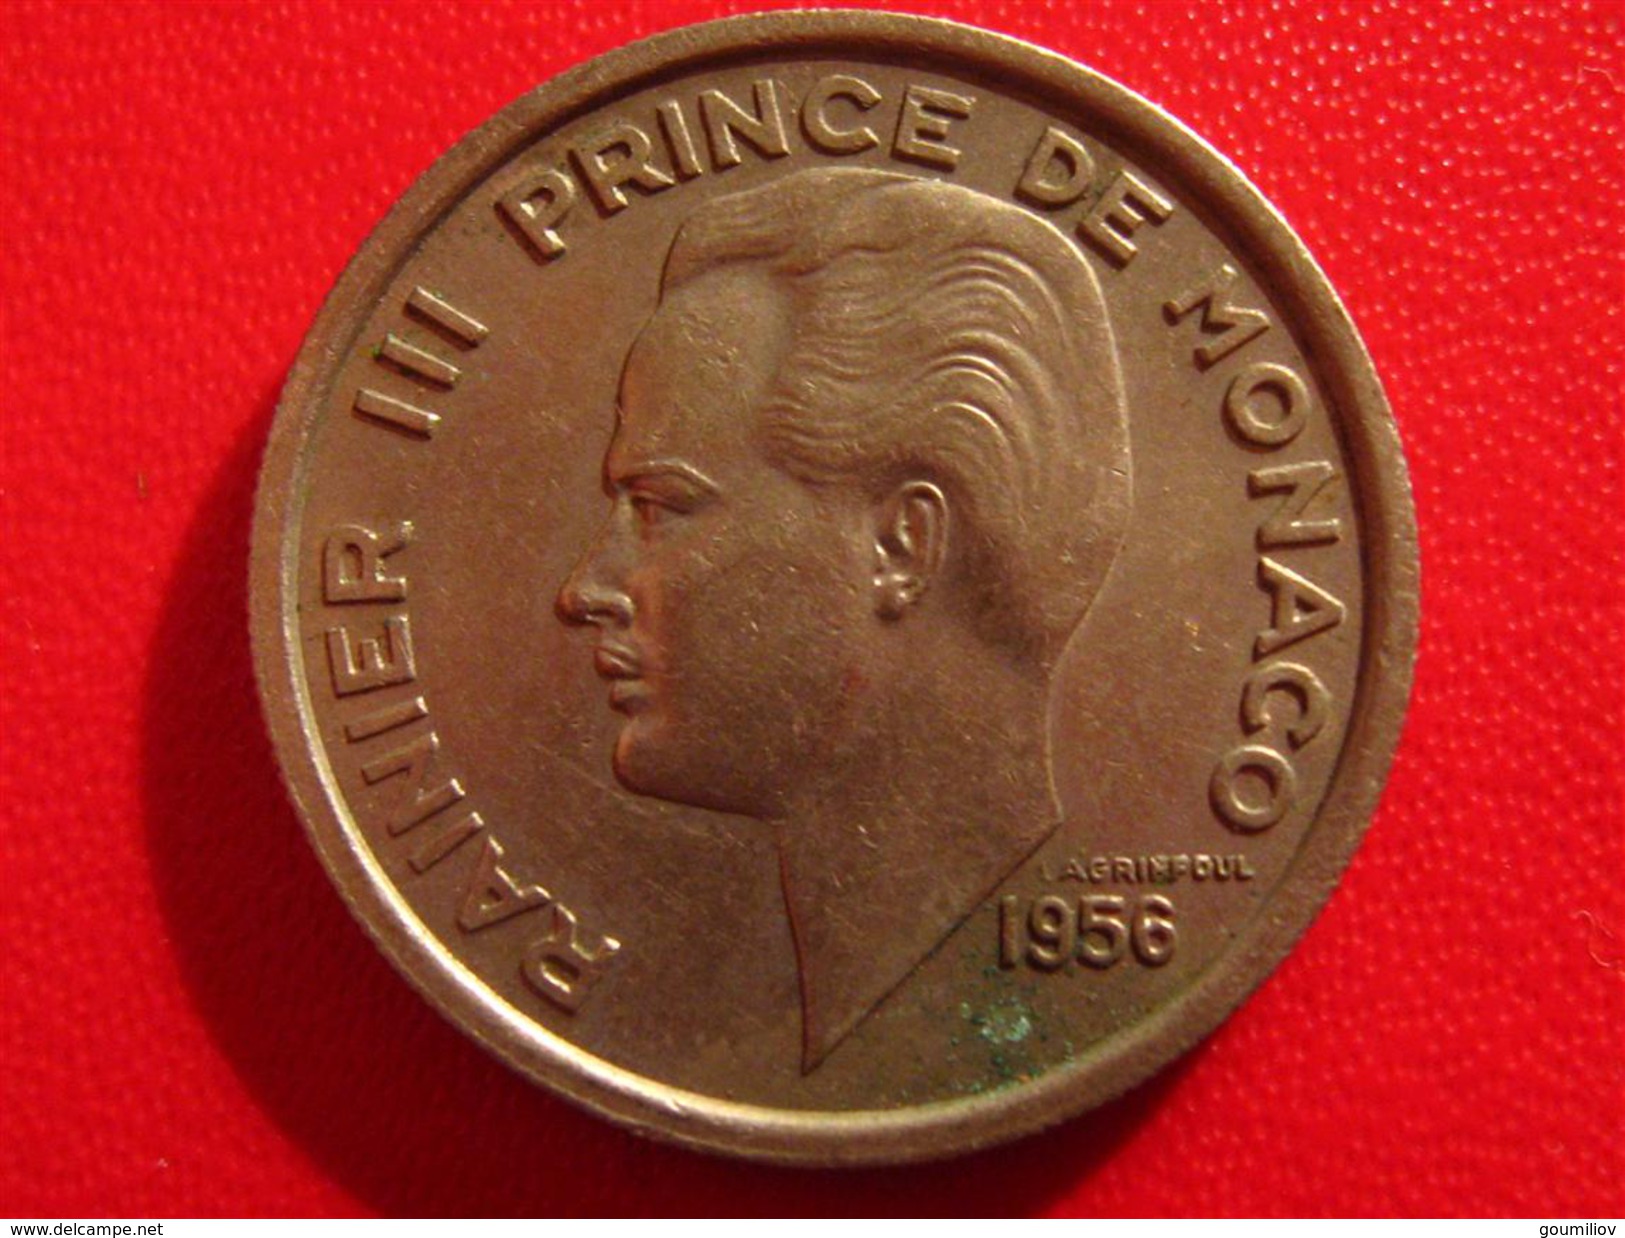 Monaco - 100 Francs Rainier III 1956 2948 - 1949-1956 Francos Antiguos